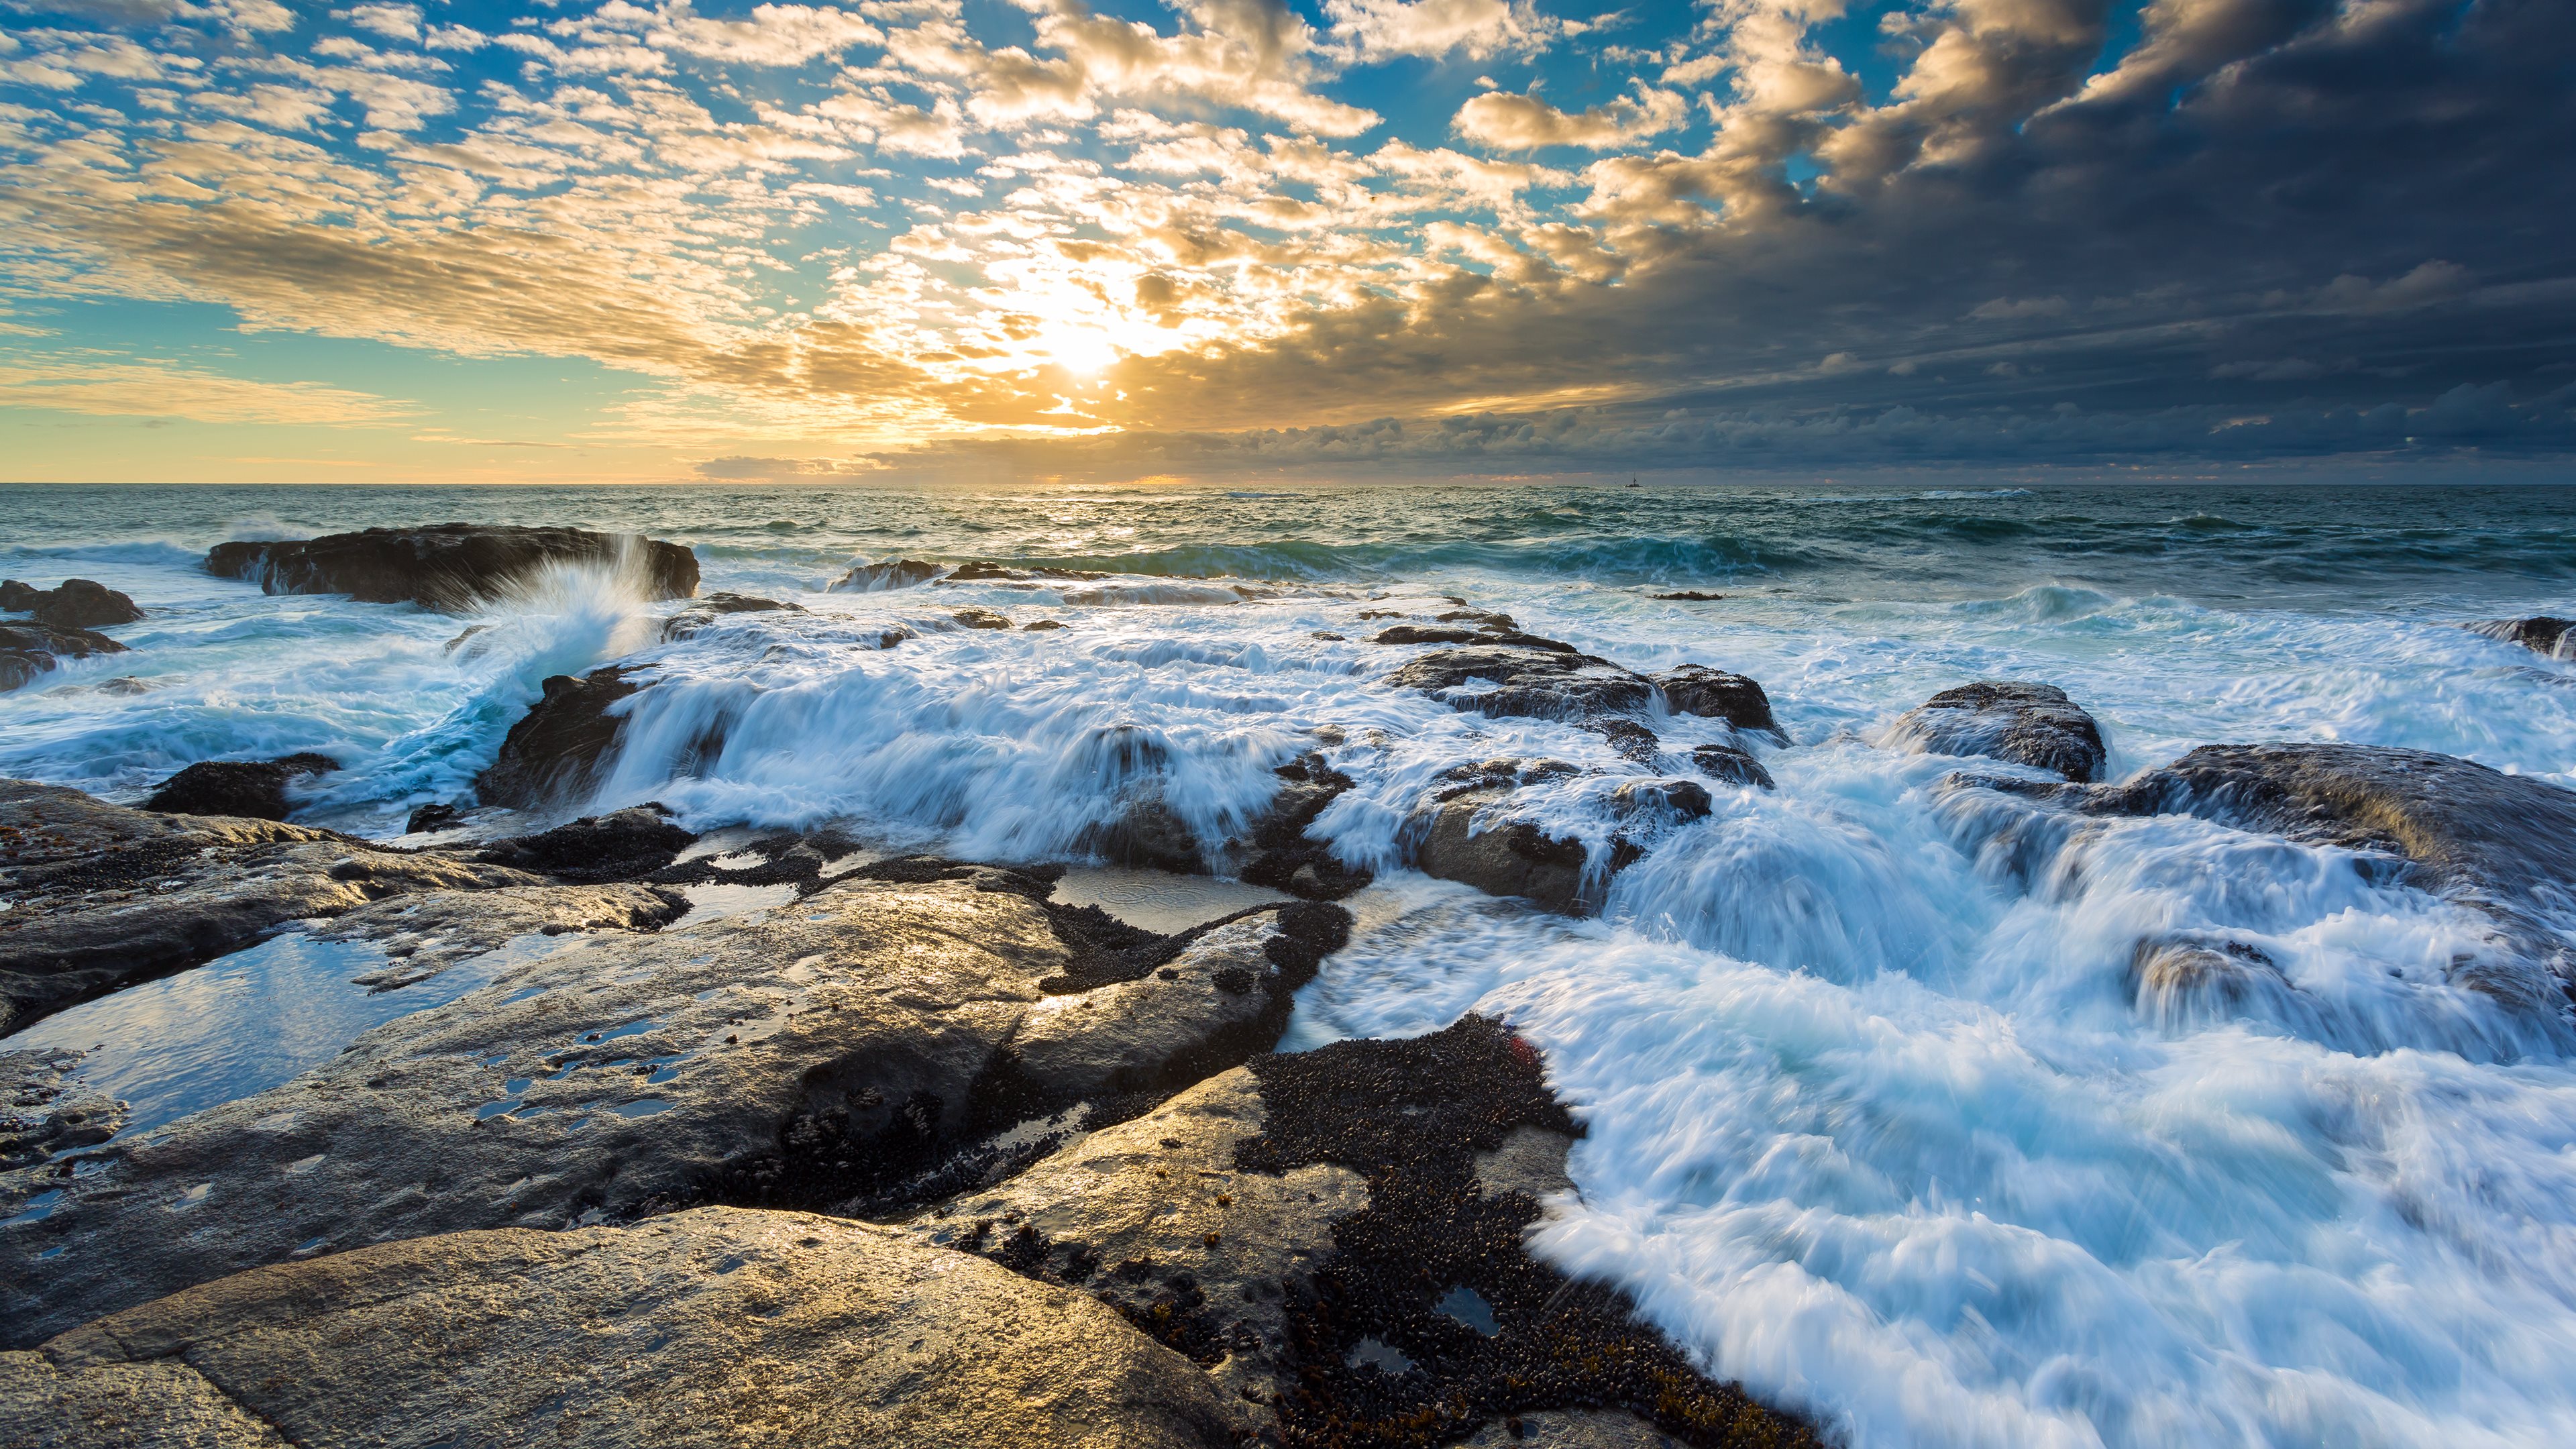 The restless sea beats on the rocks at sunset